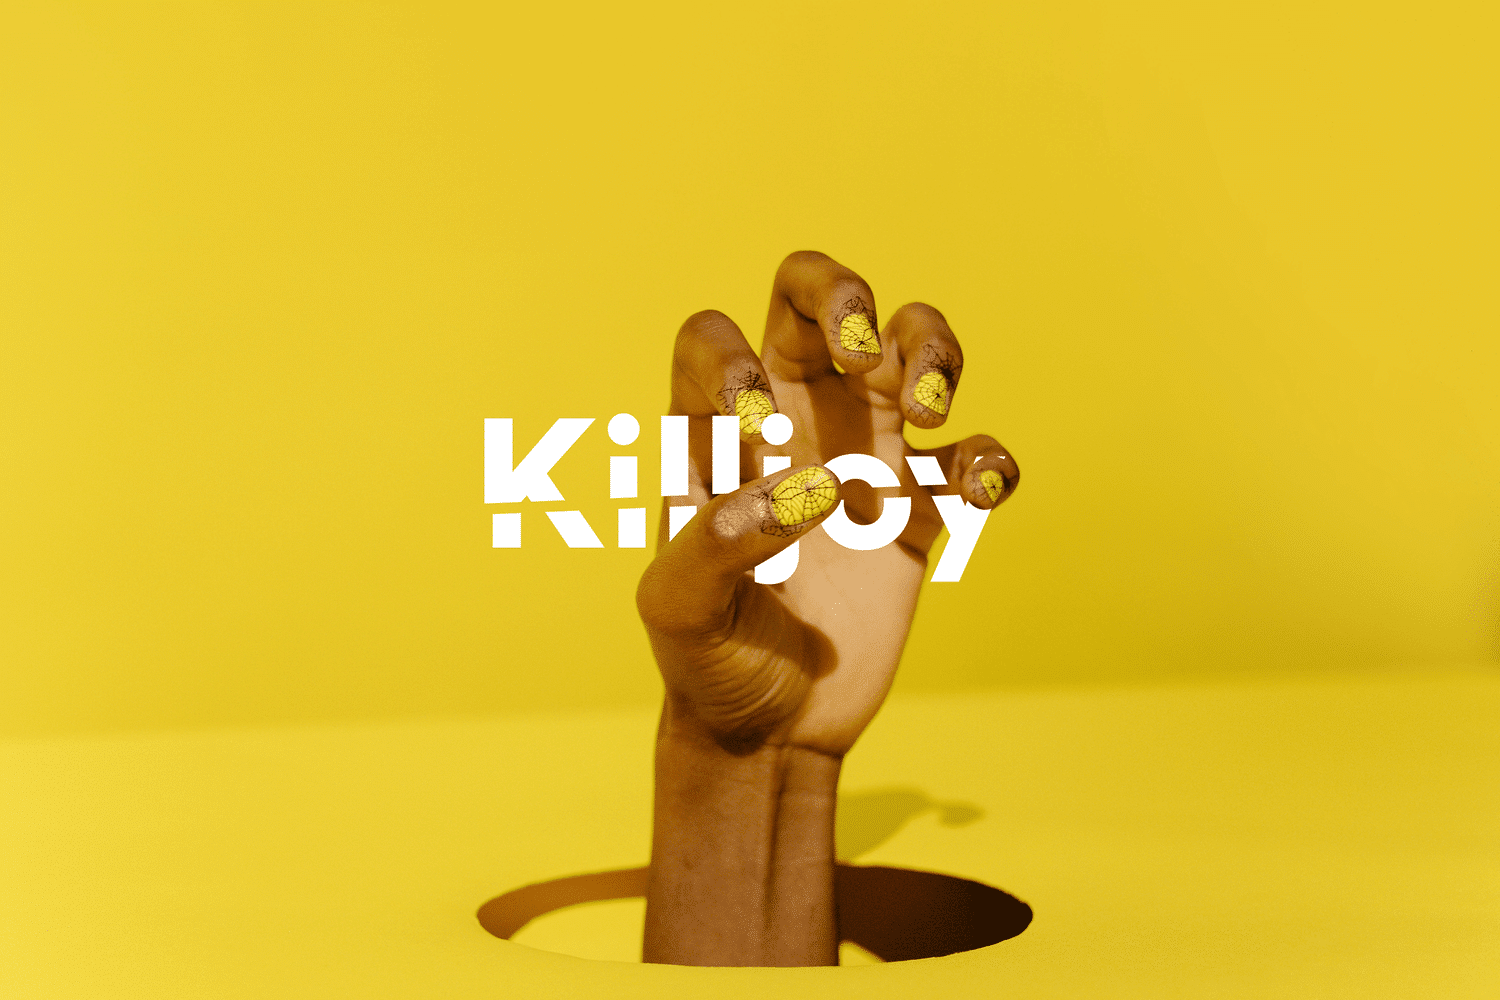 killjoy logo grabbed by hand